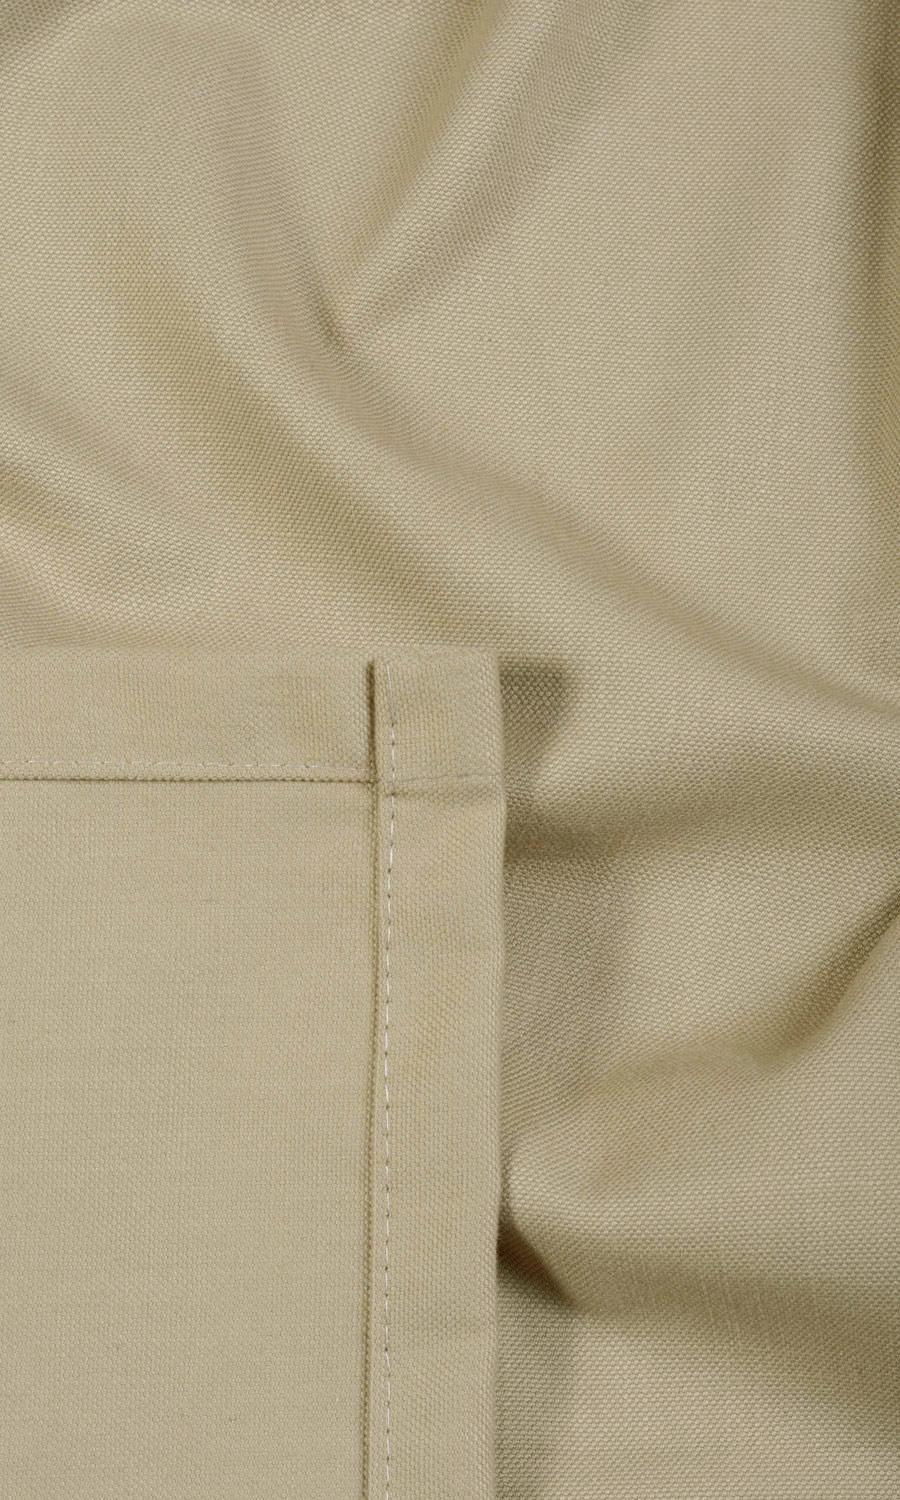 'Avarakta' Made to Measure Cotton Drapery (Beige Brown)